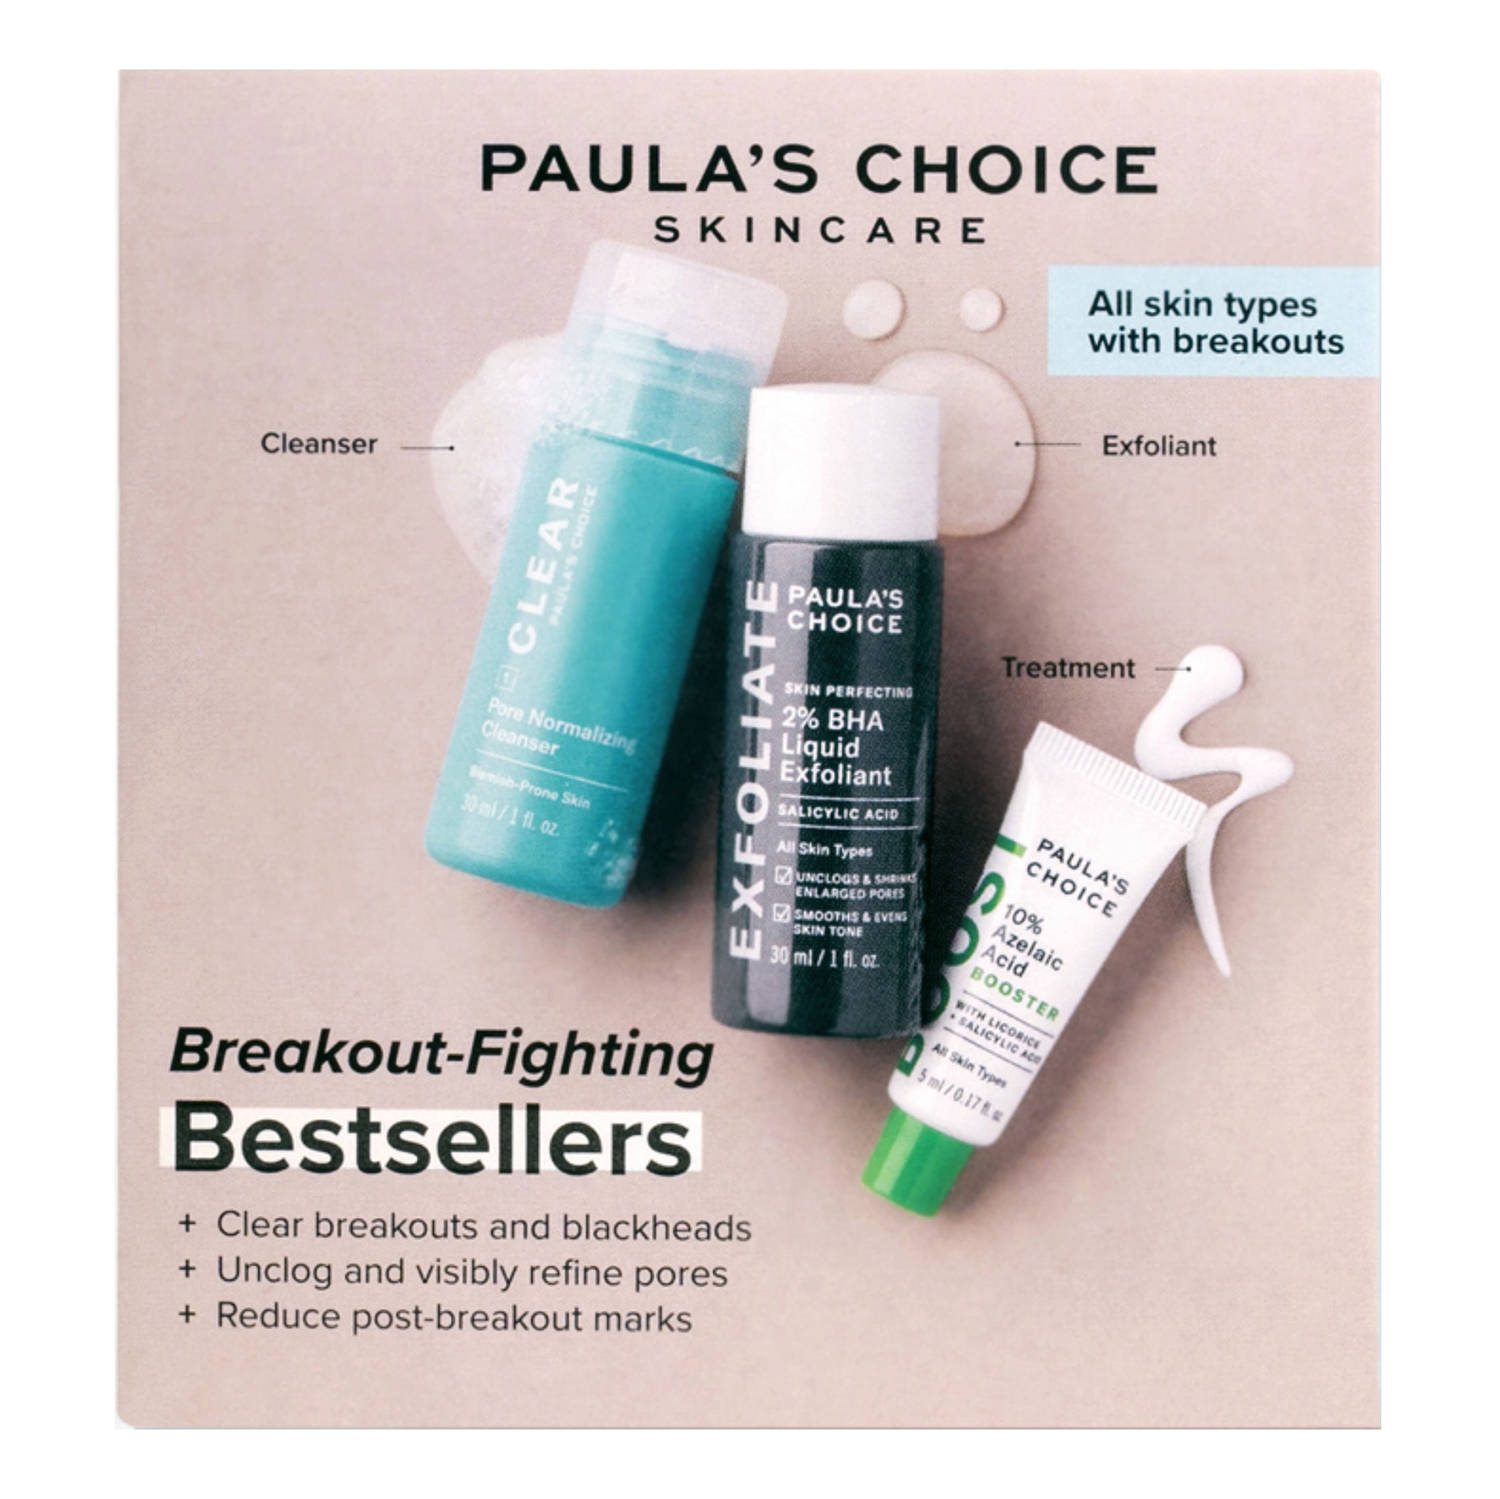 PAULA'S CHOICE Breakout Fighting Bestseller Kit